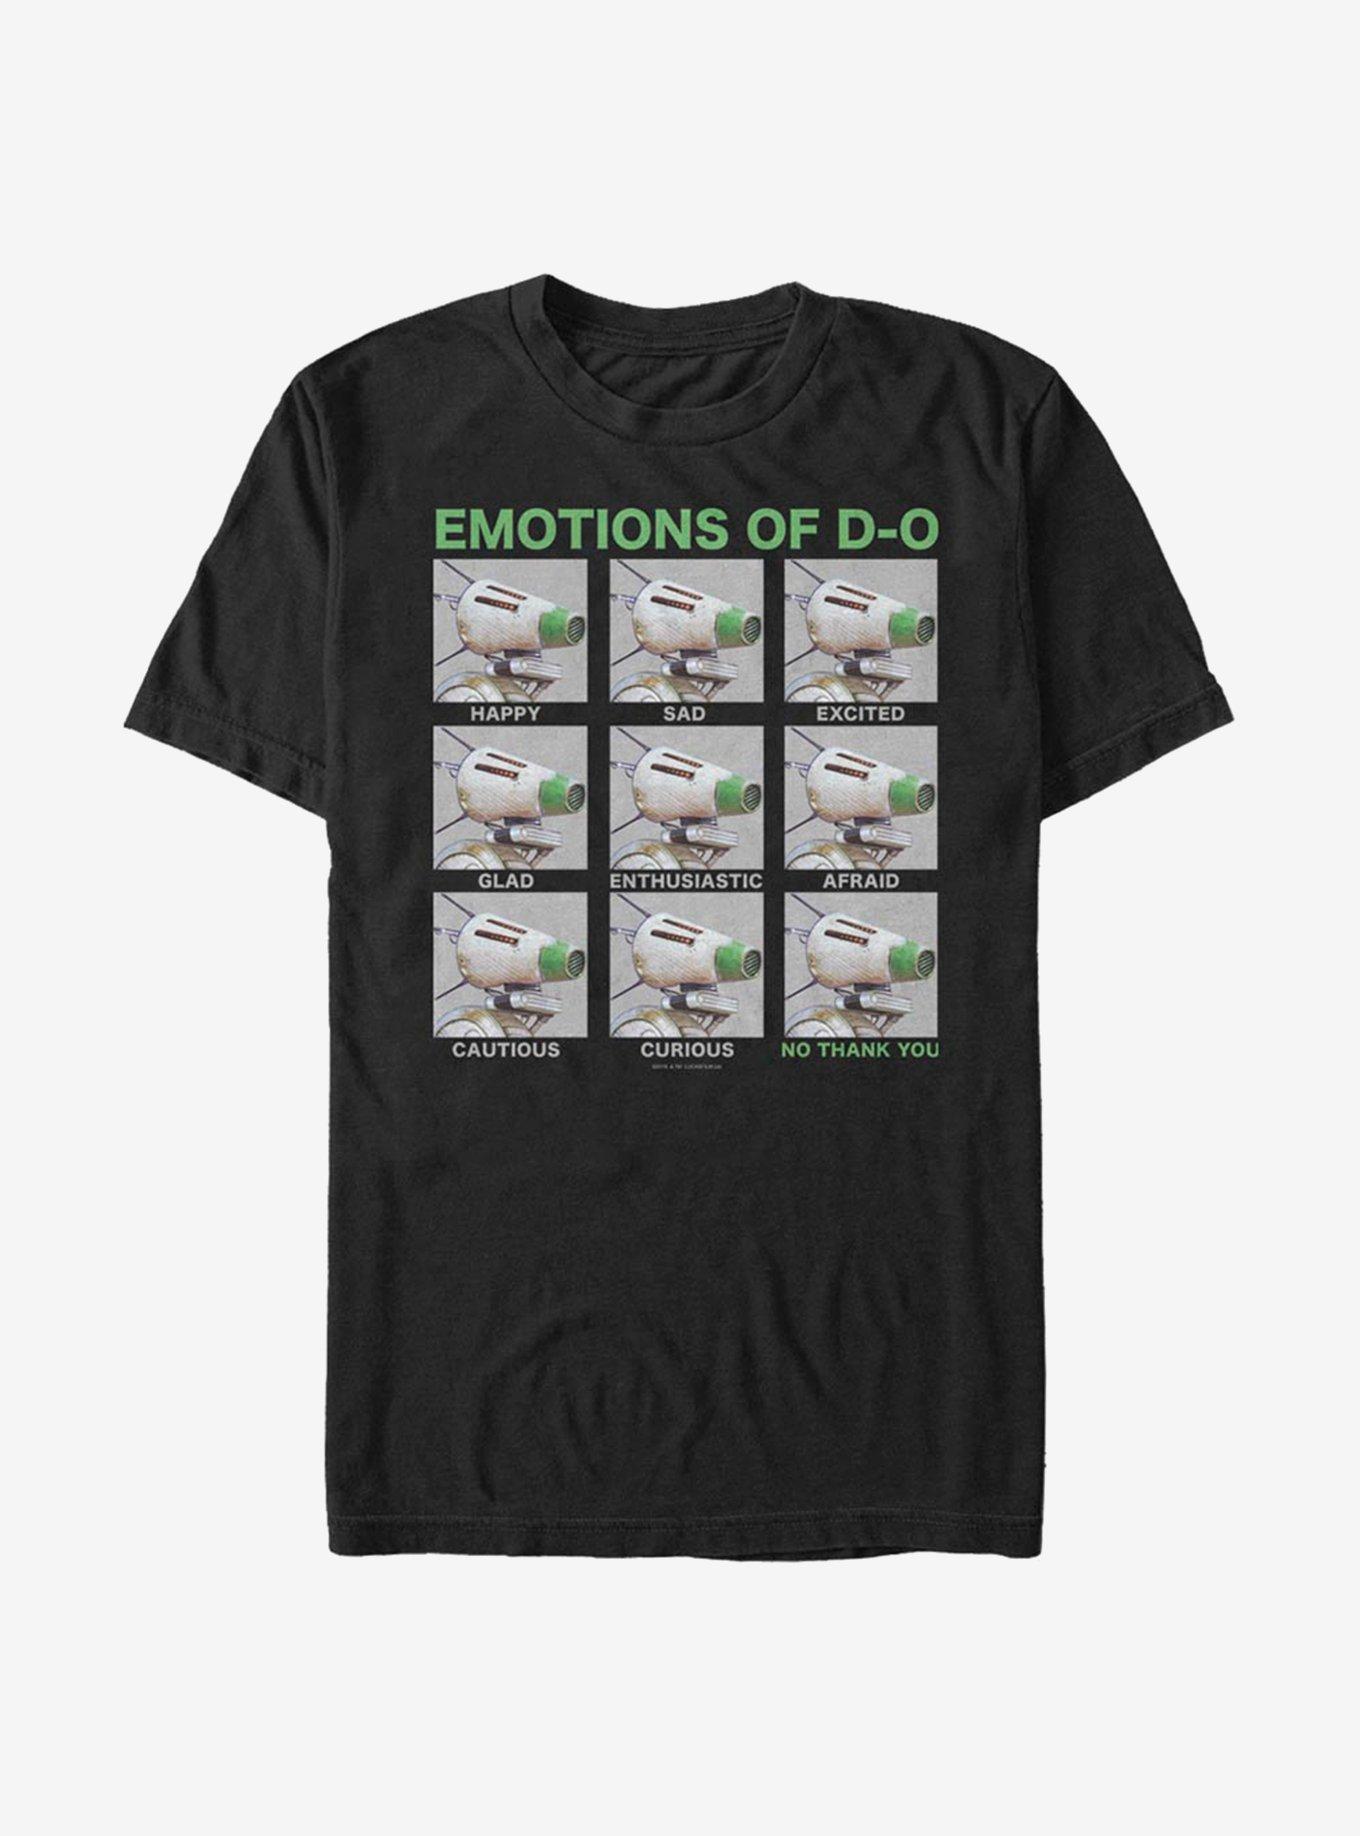 Star Wars: The Rise Of Skywalker Emotional D-O T-Shirt